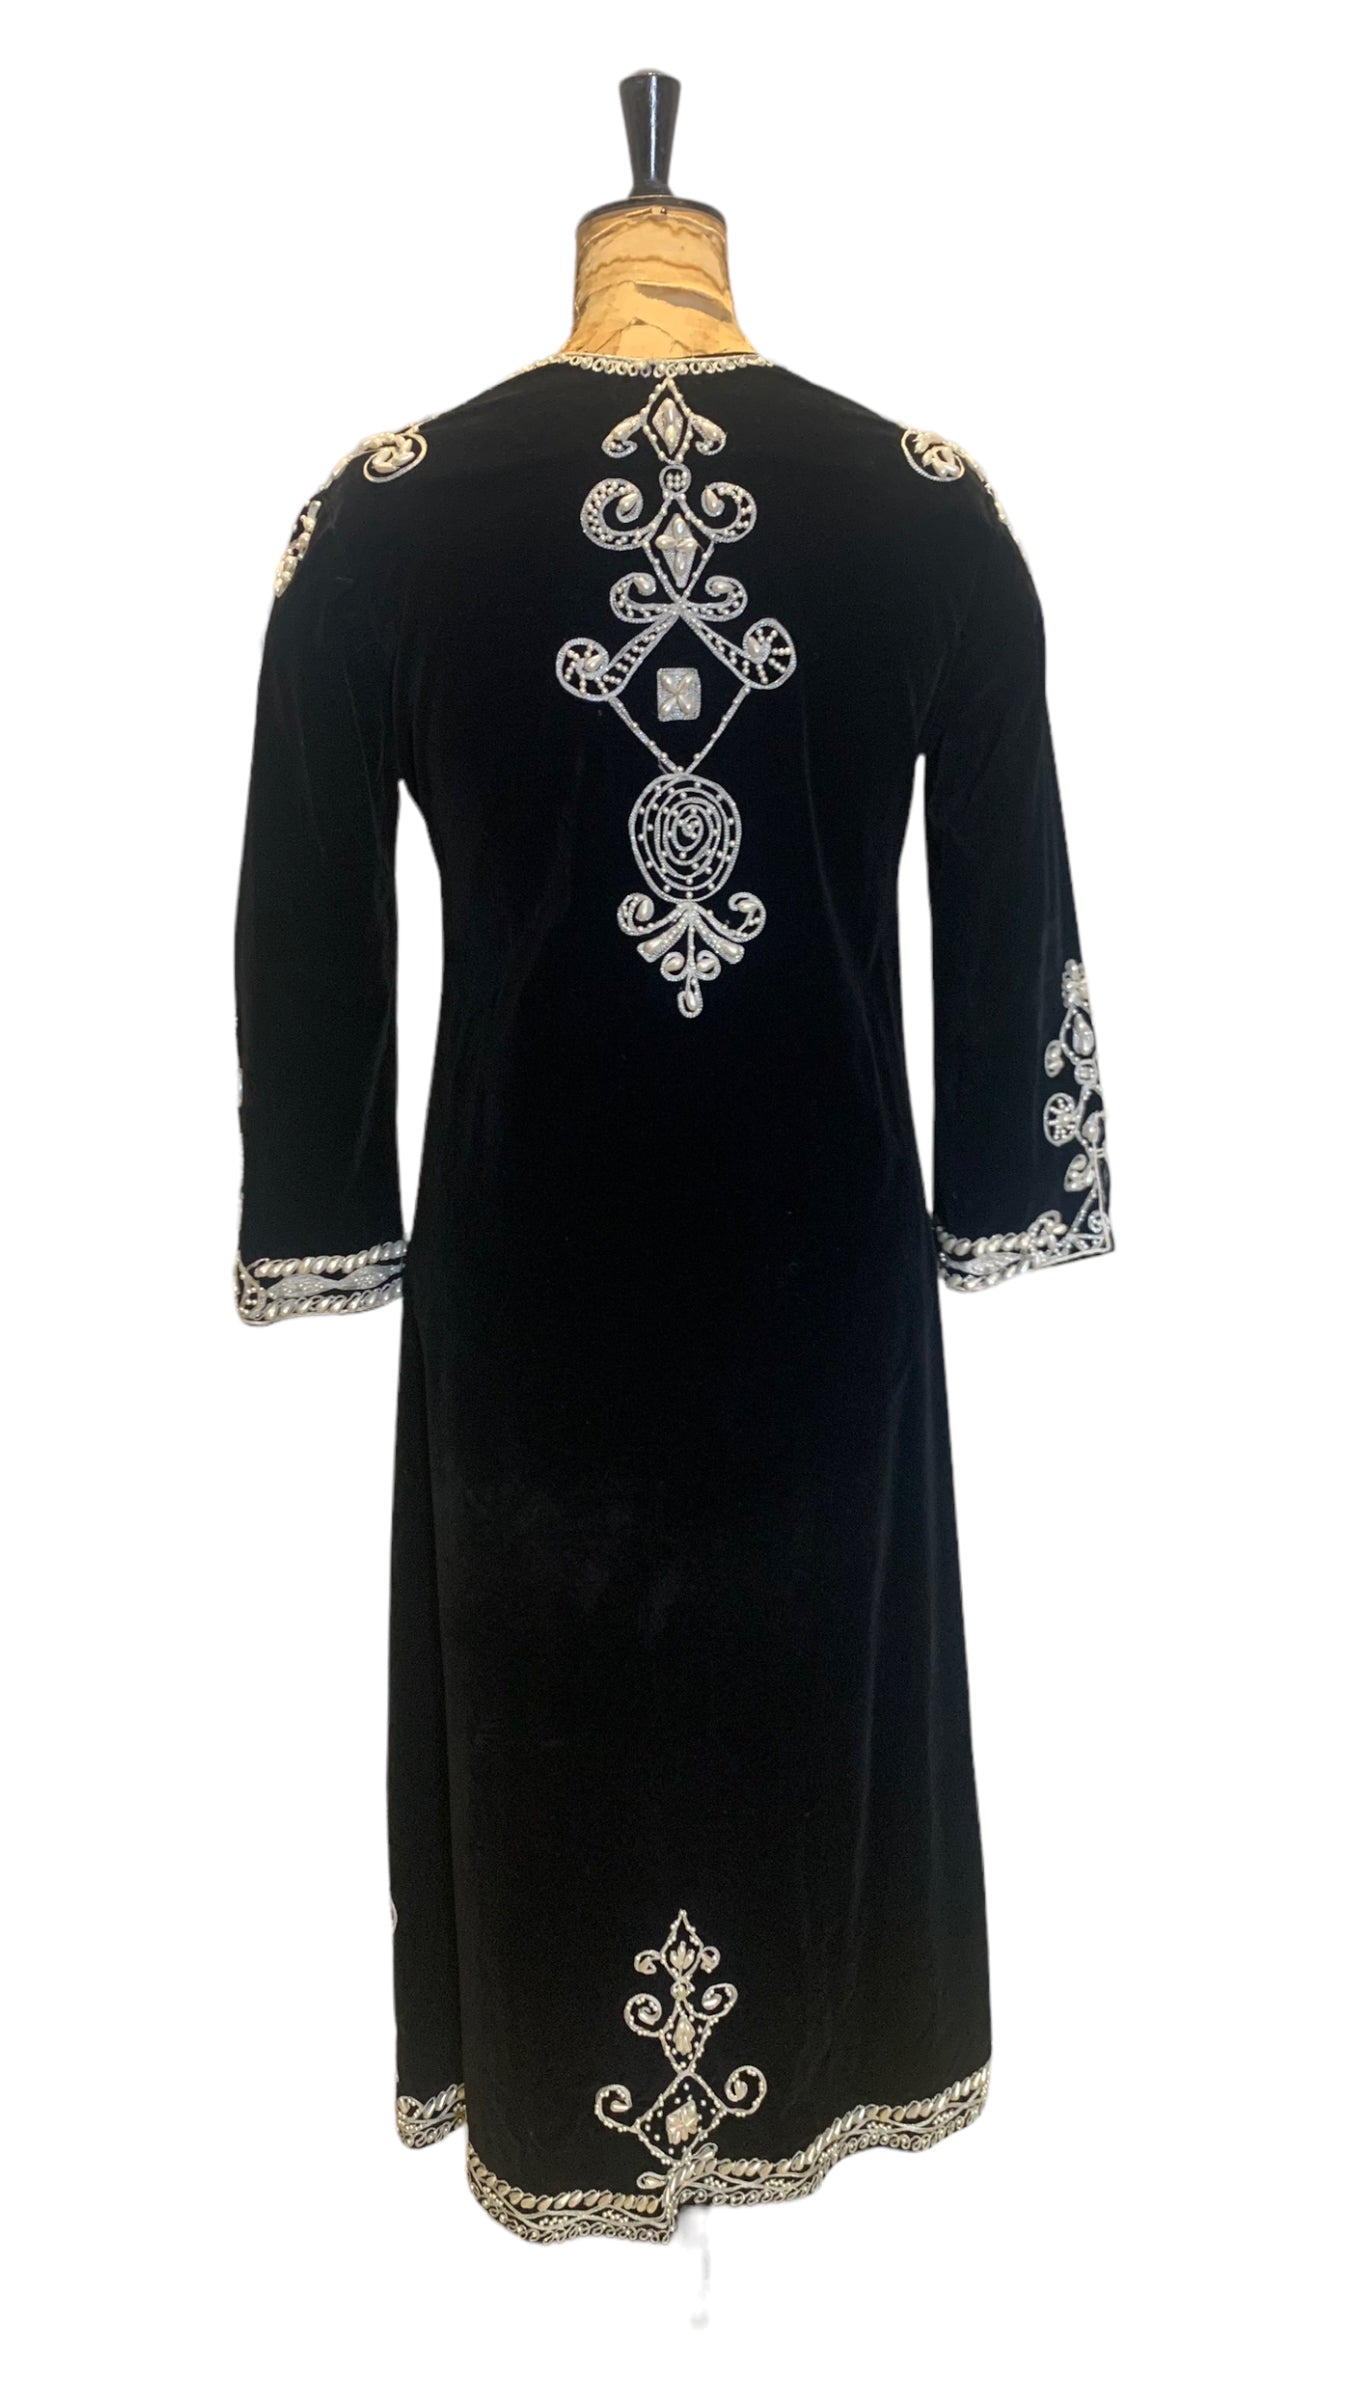 70s Vintage Black and Silver Evening Dress Size UK 12- 14